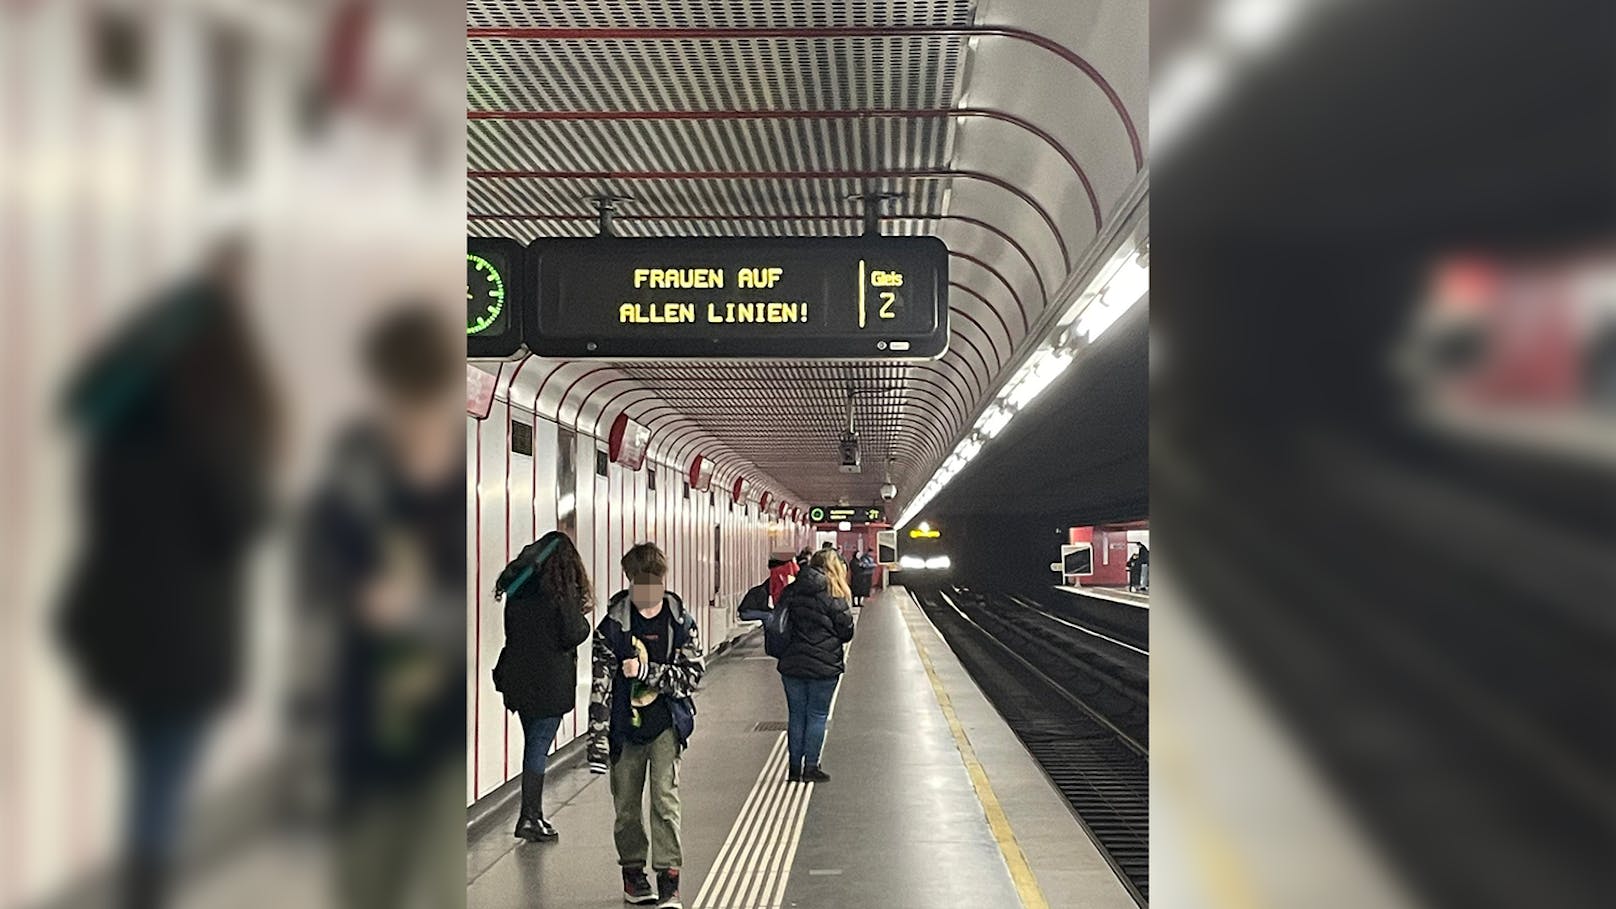 Anzeigetafel in Wiener U-Bahn zeigt wichtige Botschaft